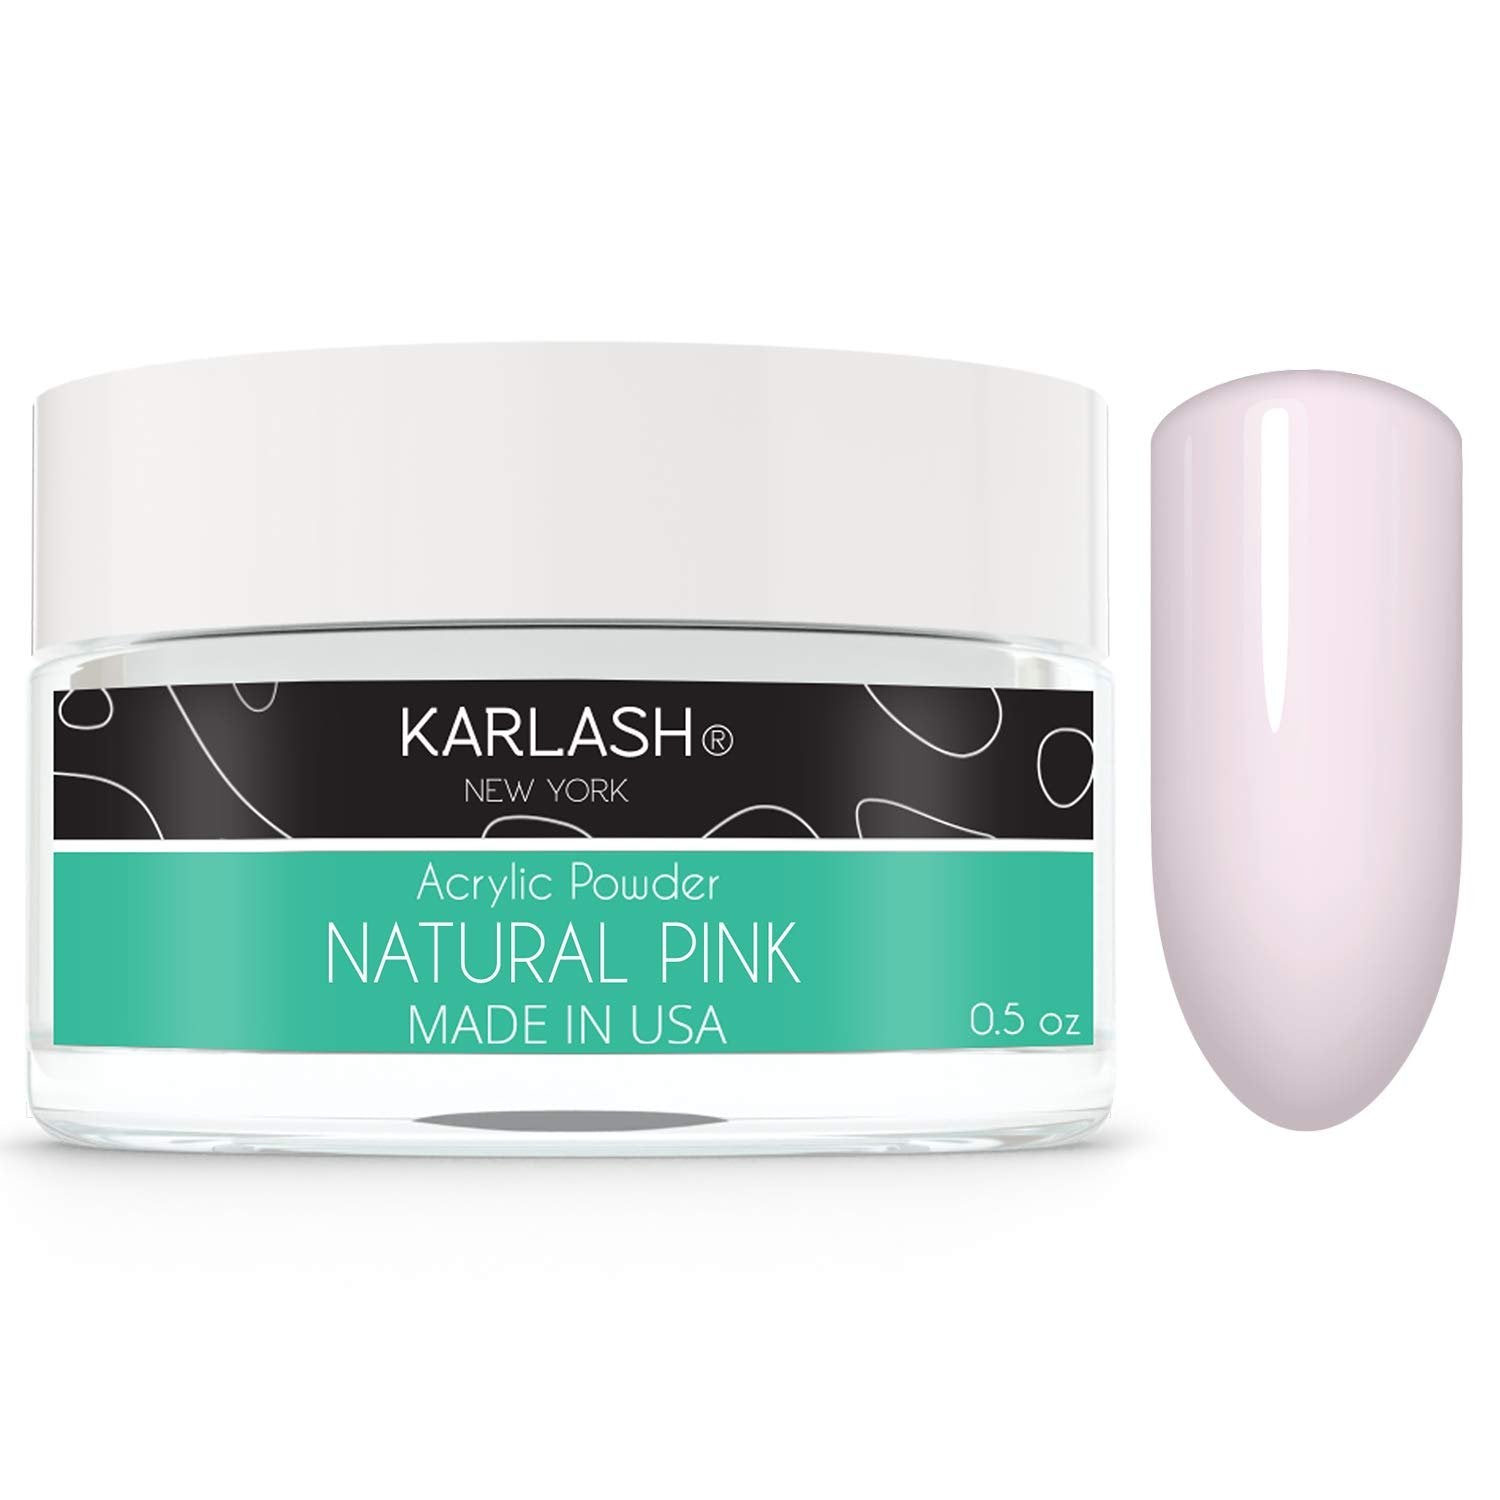 Karlash Professional Acrylic Powder Natural Pink 0.5 oz